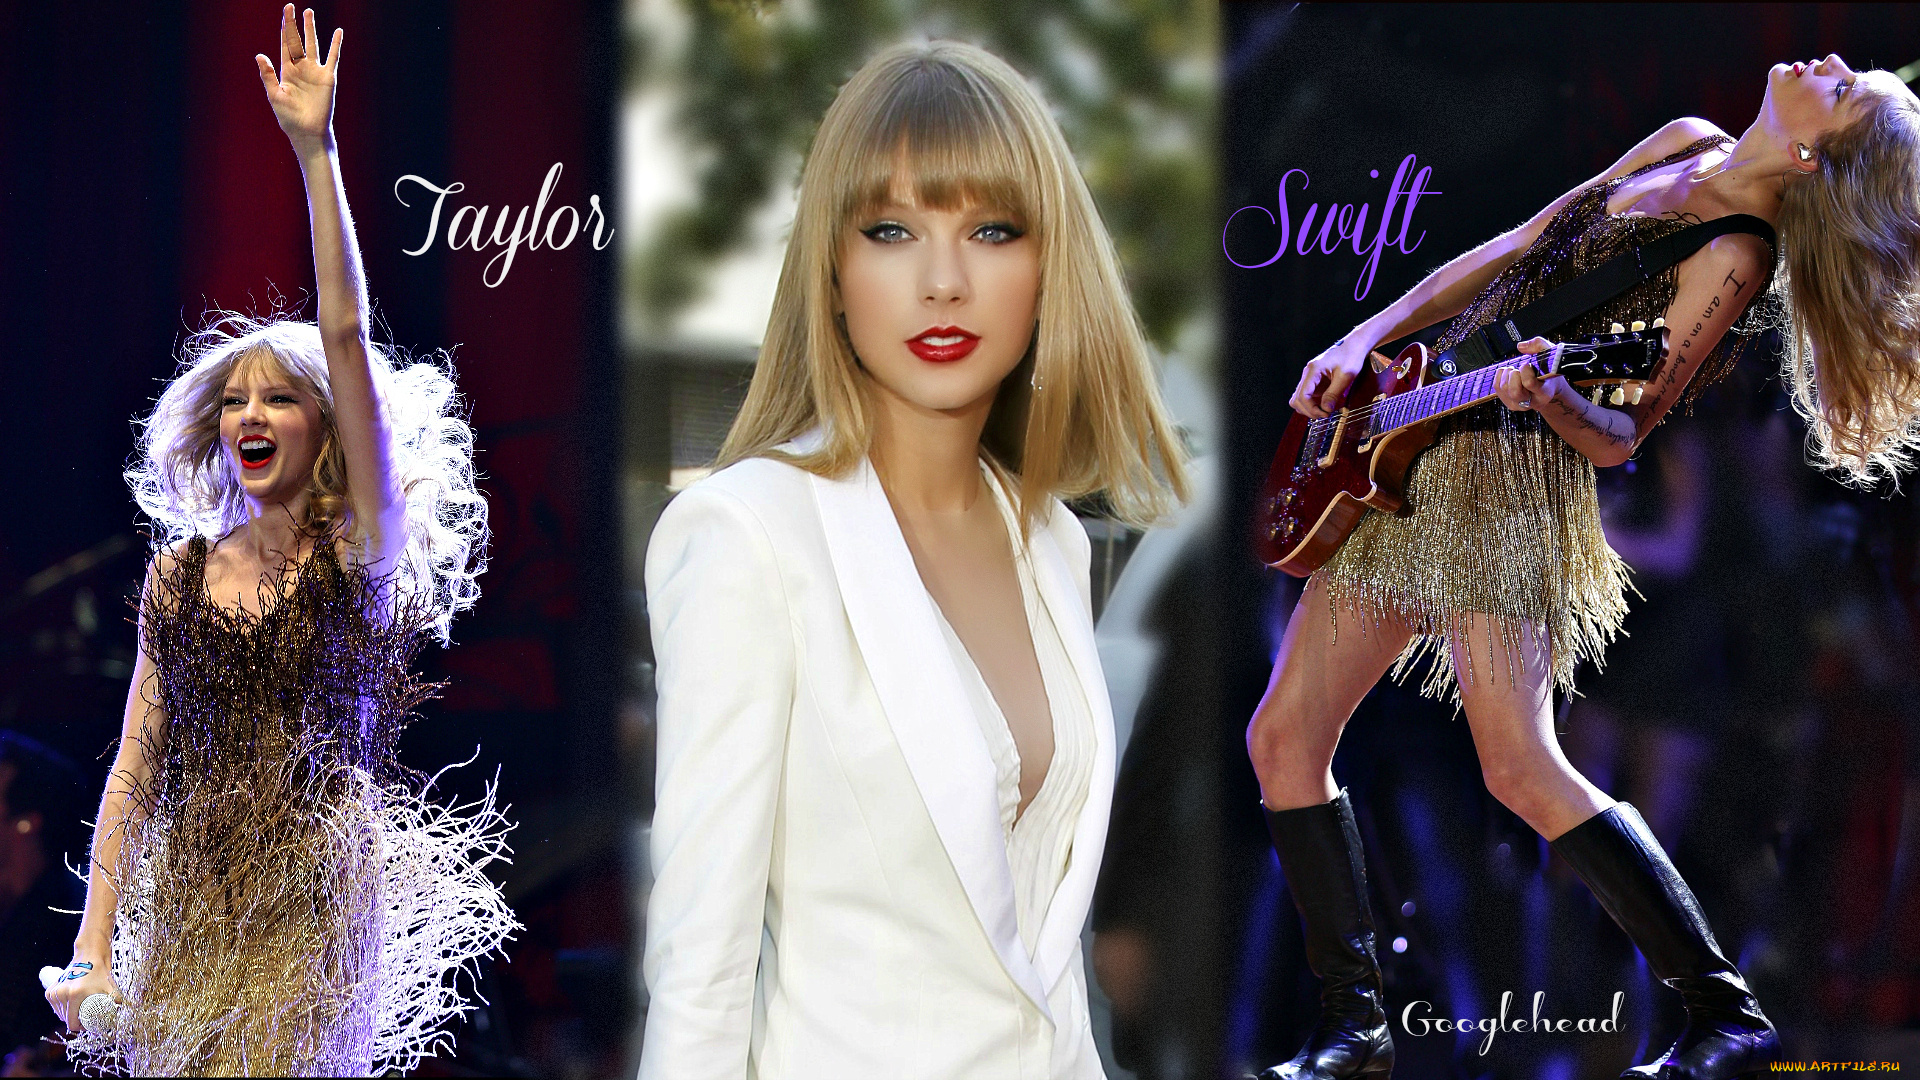 Taylor, Swift, девушки, музыкант